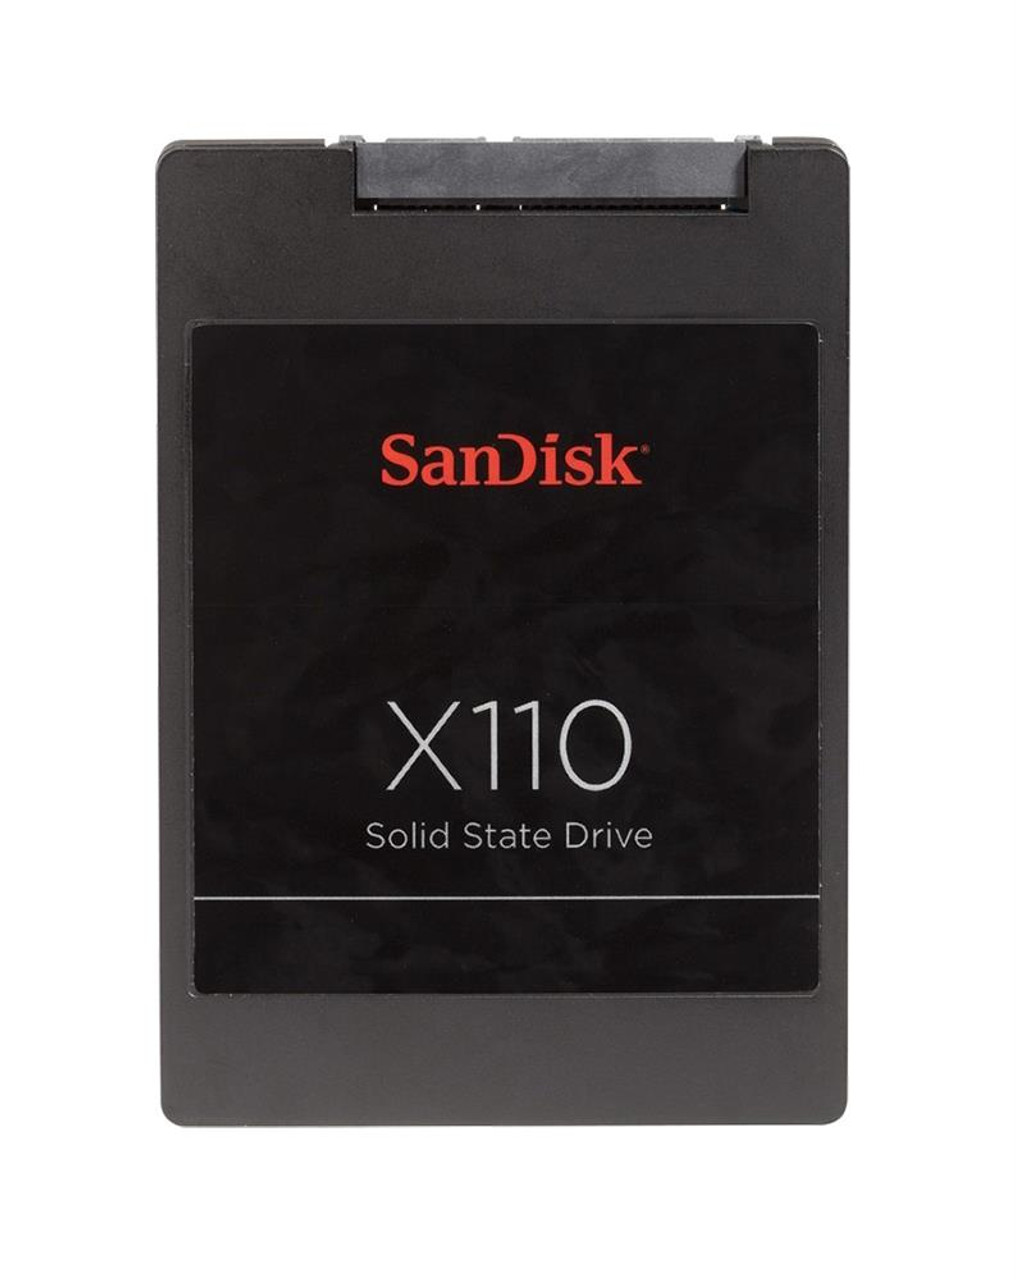 SD6SB1M-064G-1006 SanDisk X110 64GB MLC SATA 6Gbps 2.5-inch Internal Solid State Drive (SSD)